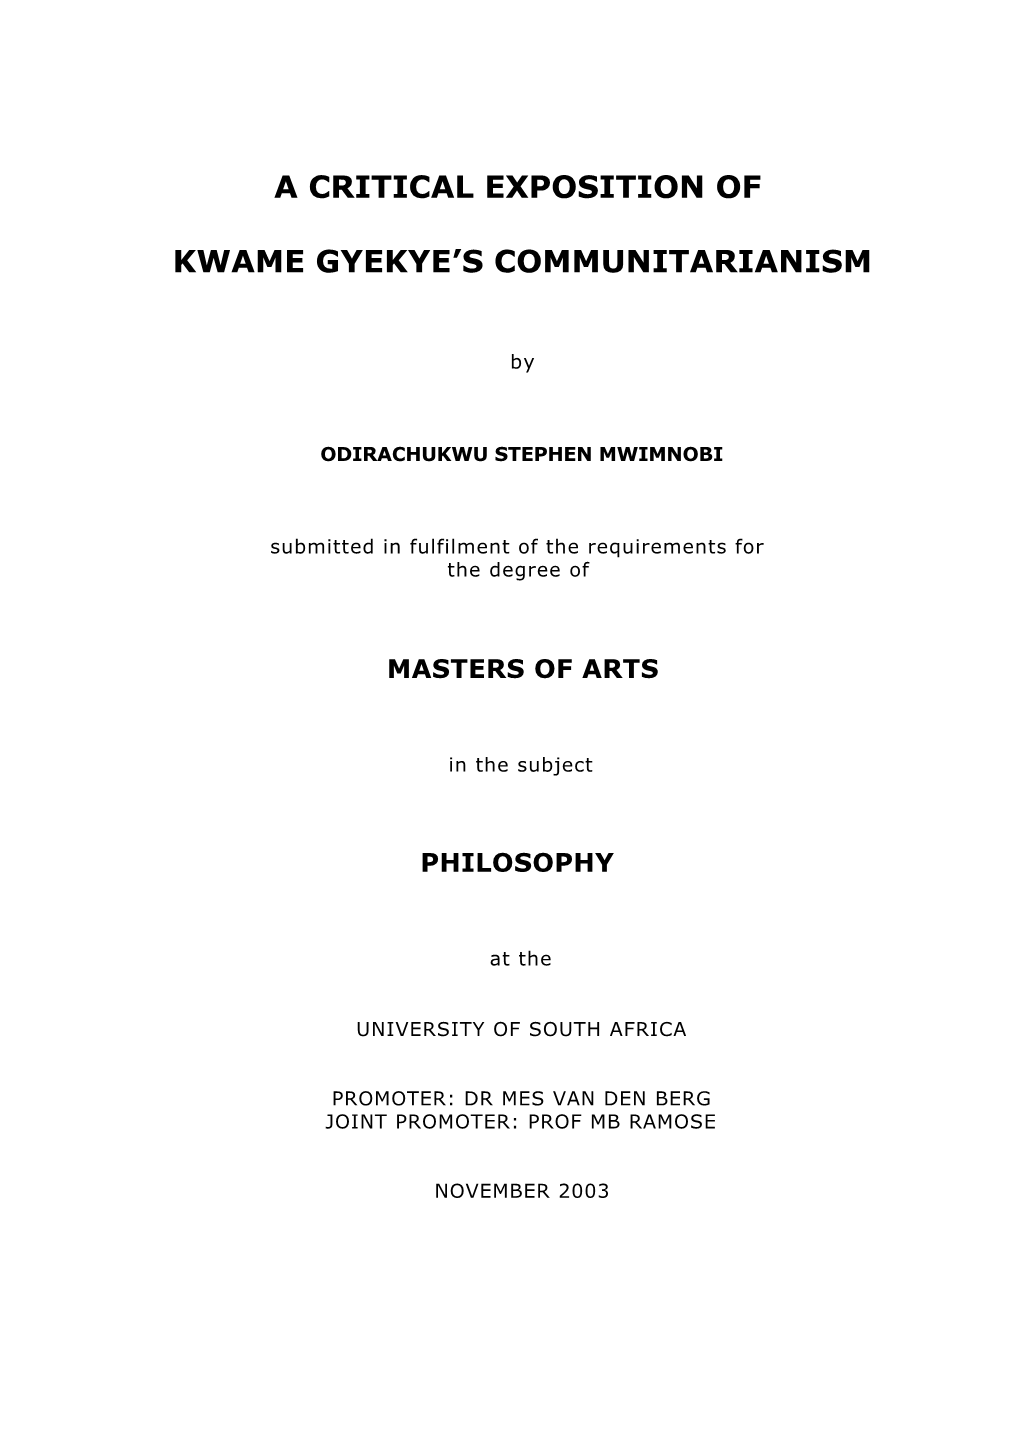 A Critical Exposition of Kwame Gyekye's Communitarianism